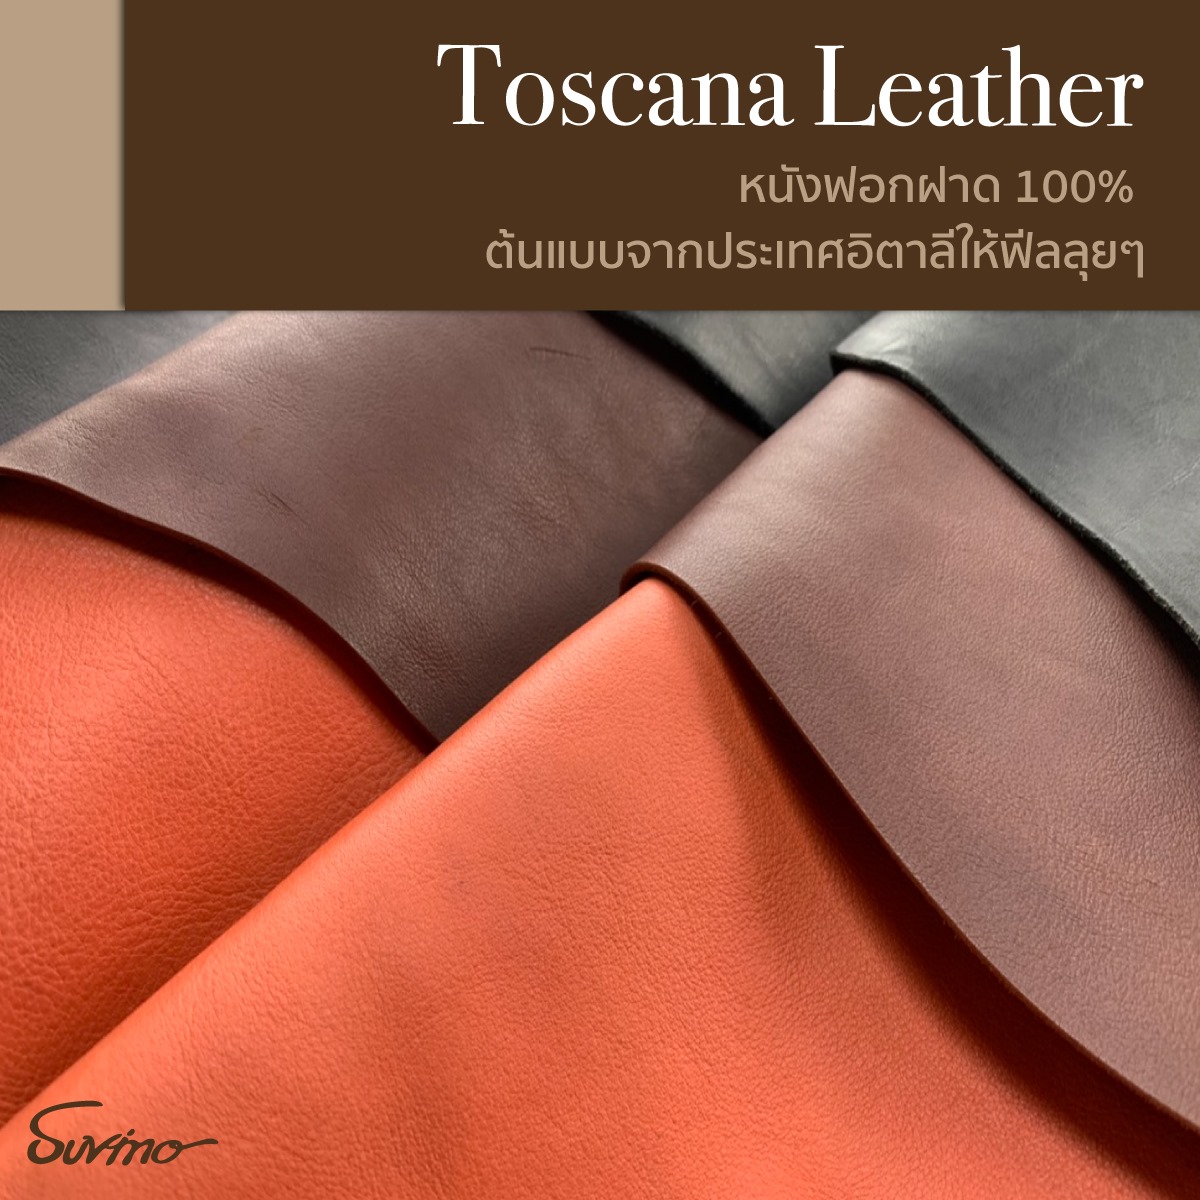 Toscana Leather